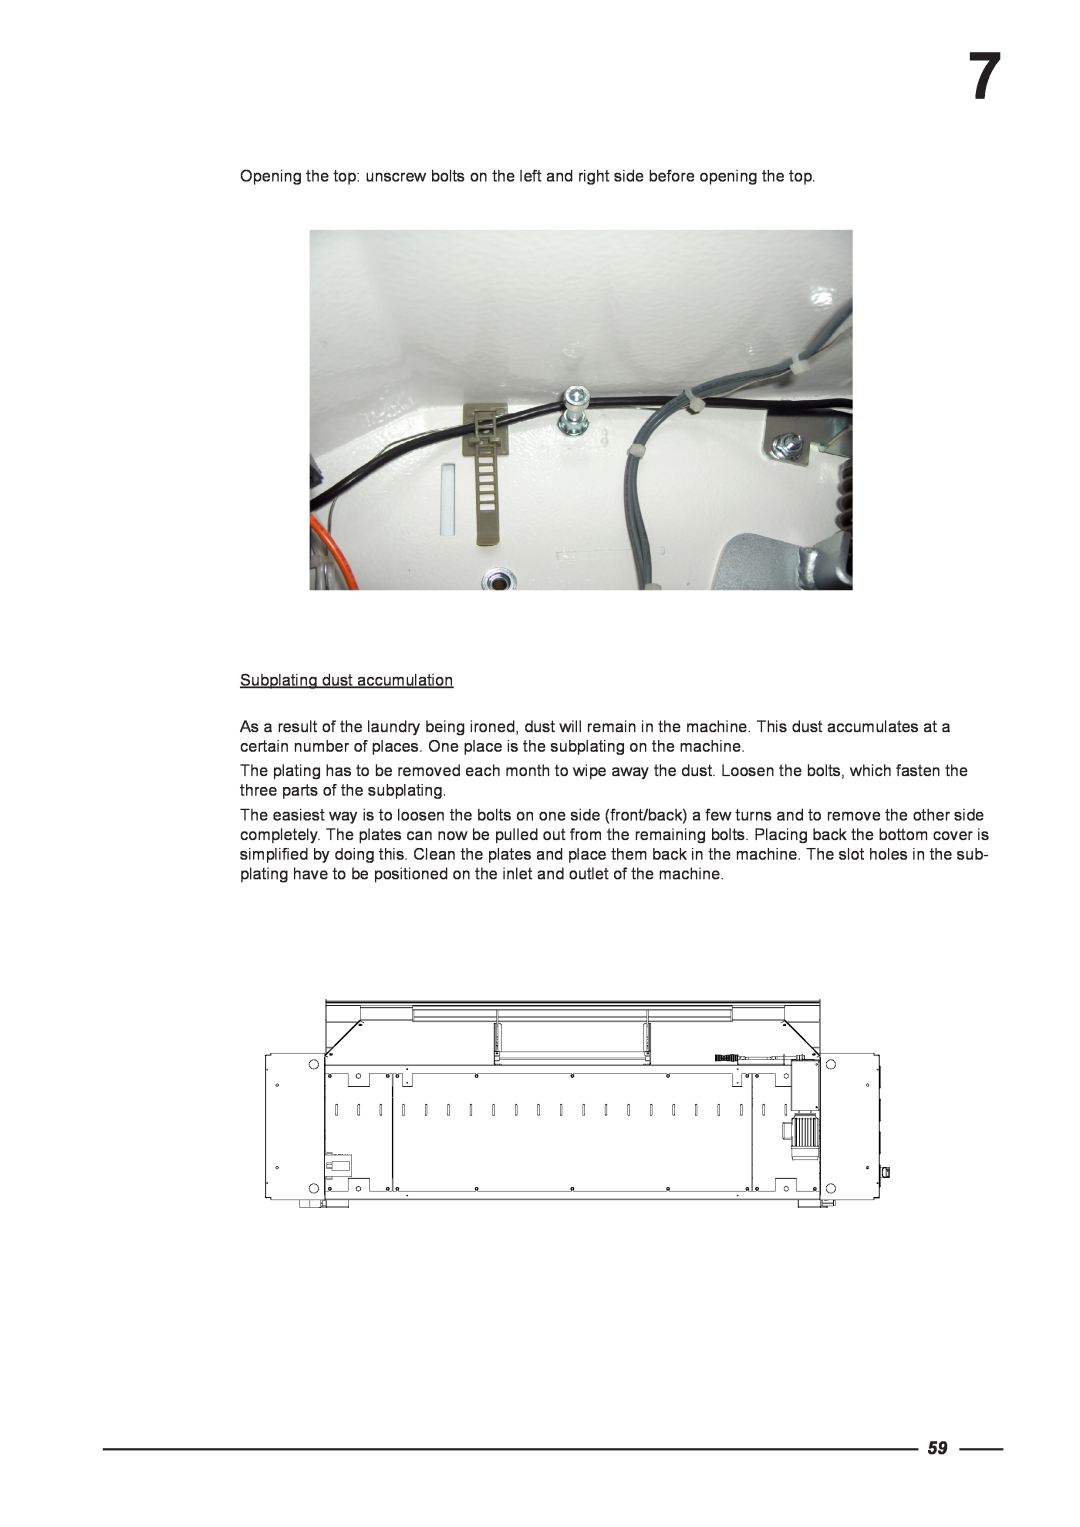 Alliance Laundry Systems CI 2050/325, CI 1650/325 instruction manual Subplating dust accumulation 